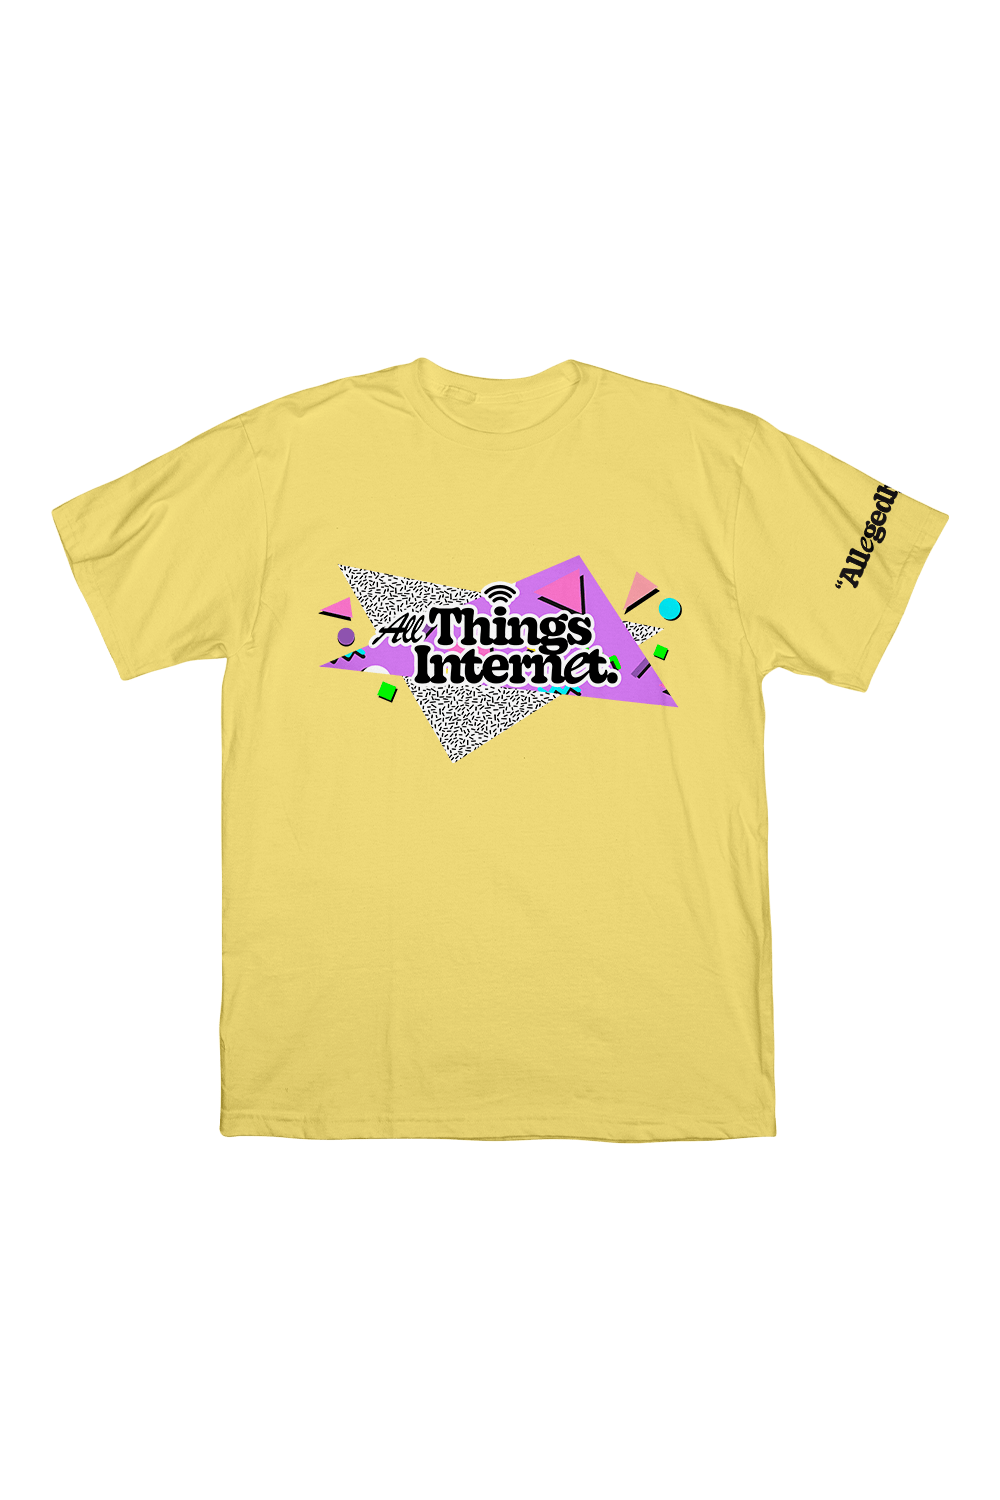 All Things Internet Yellow Shirt